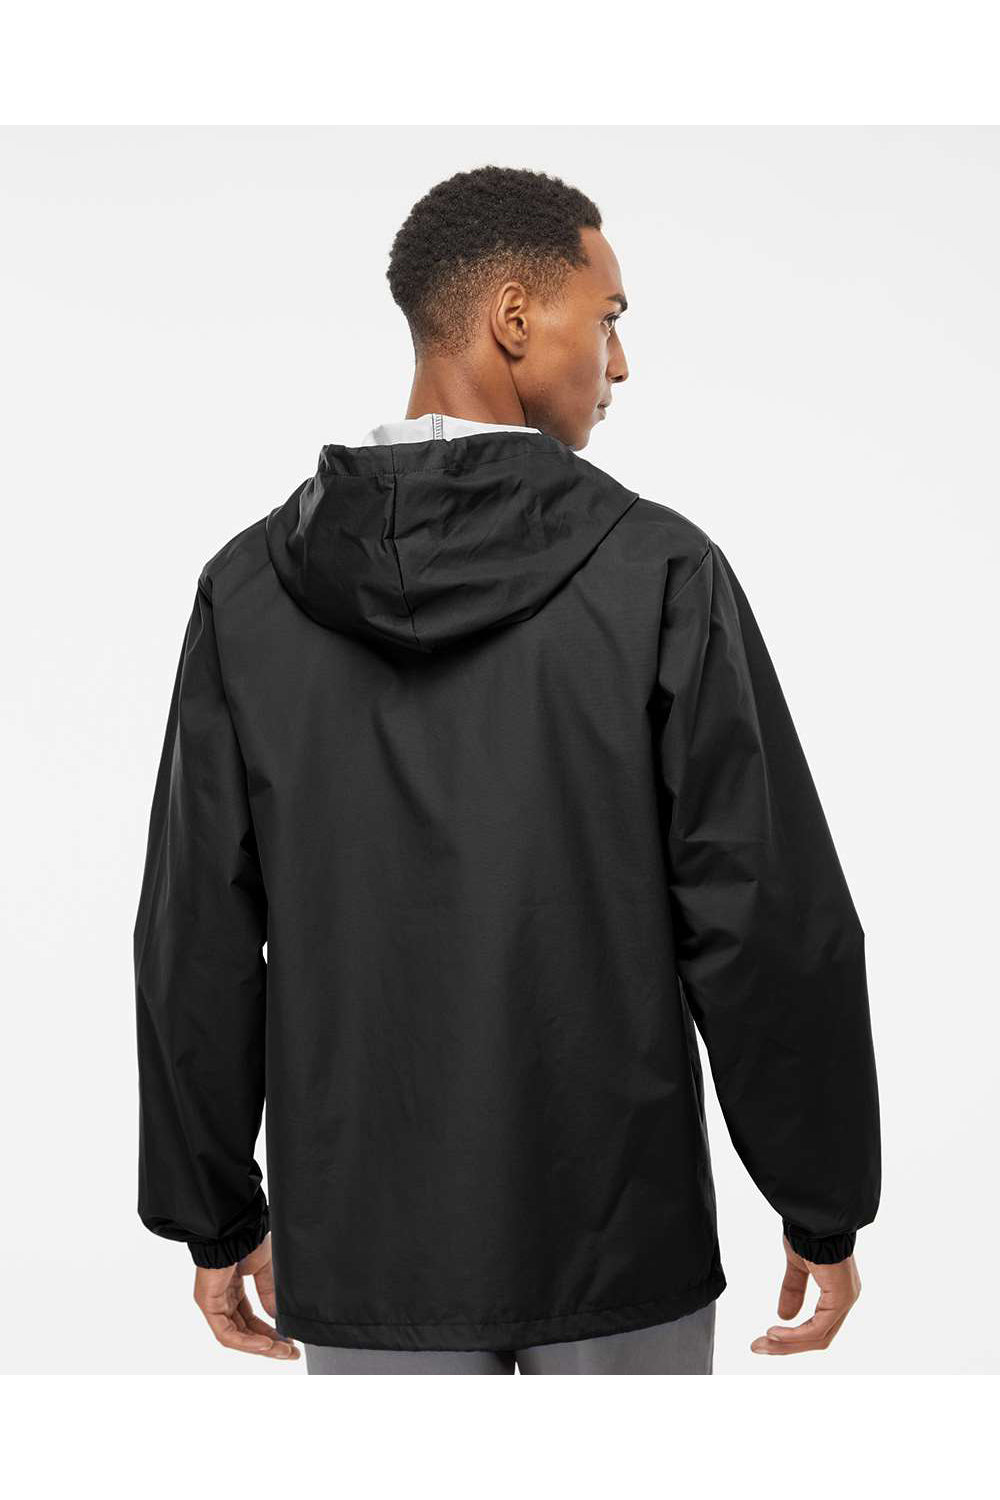 Independent Trading Co. EXP95NB Mens Water Resistant Snap Down Hooded Windbreaker Jacket Black Model Back